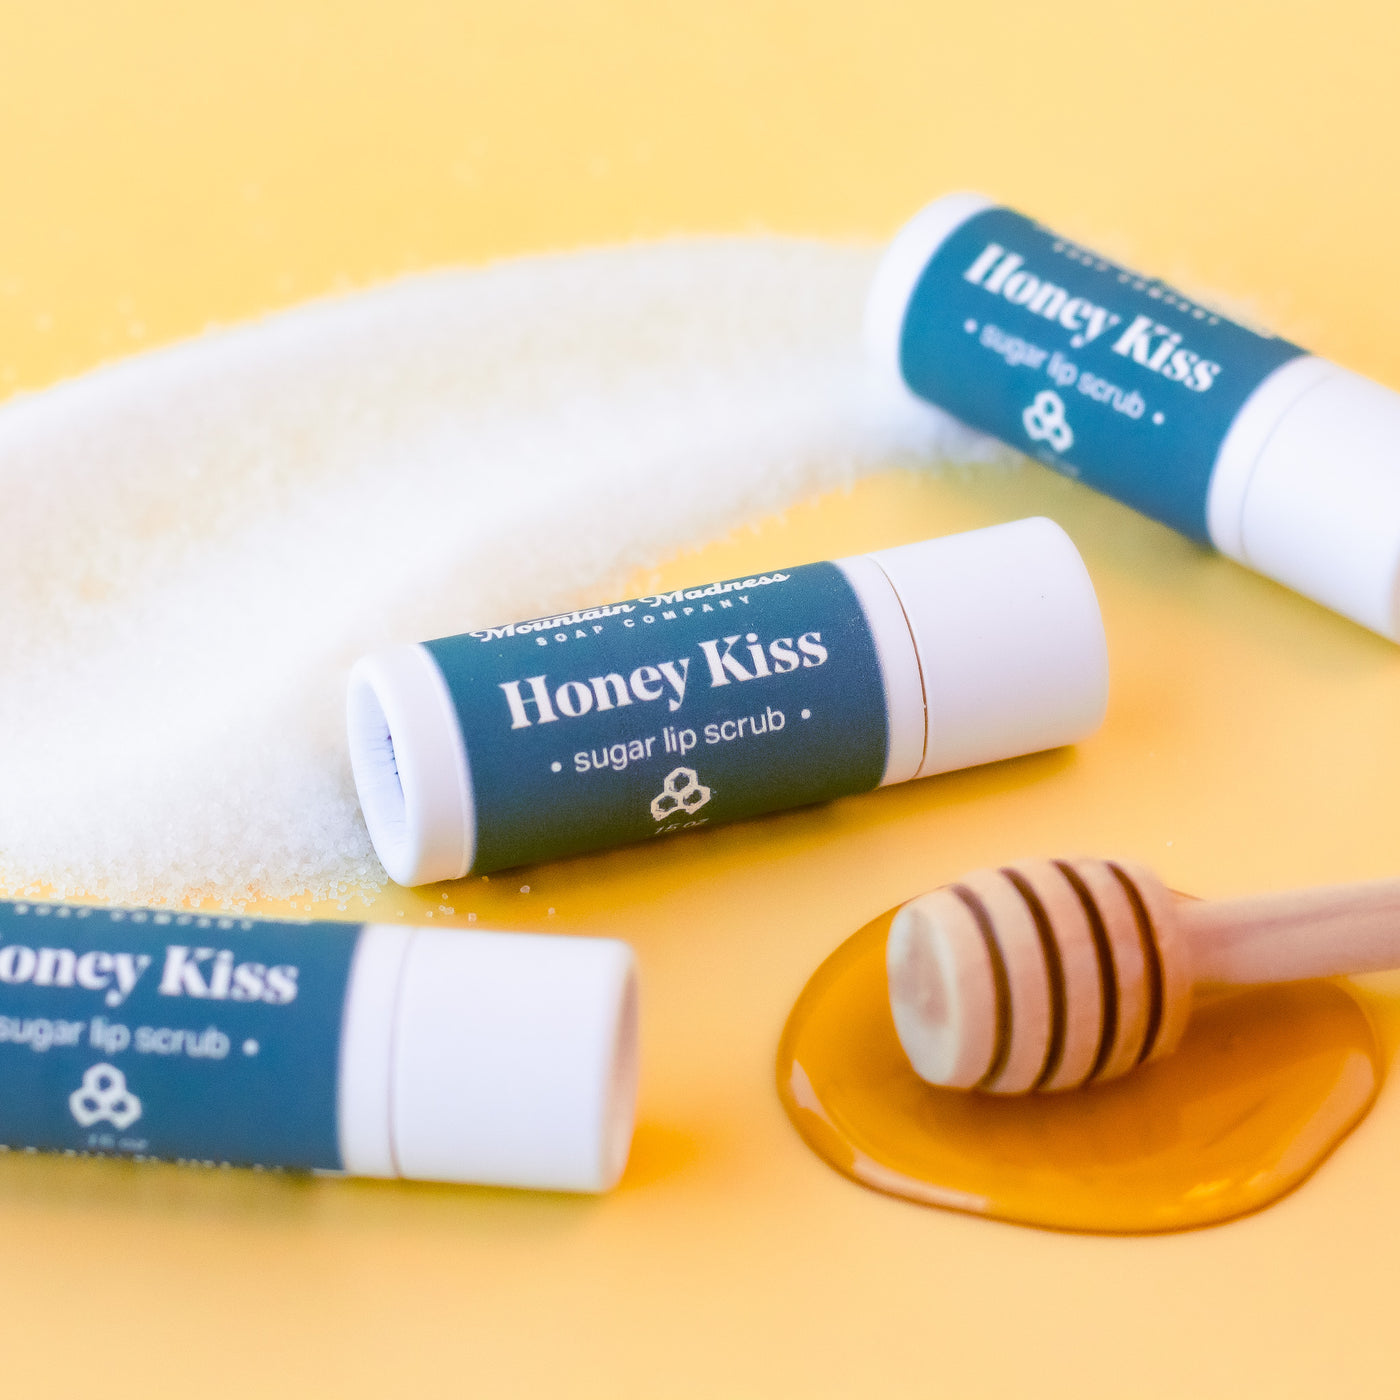 Honey Kiss Sugar Lip Scrub